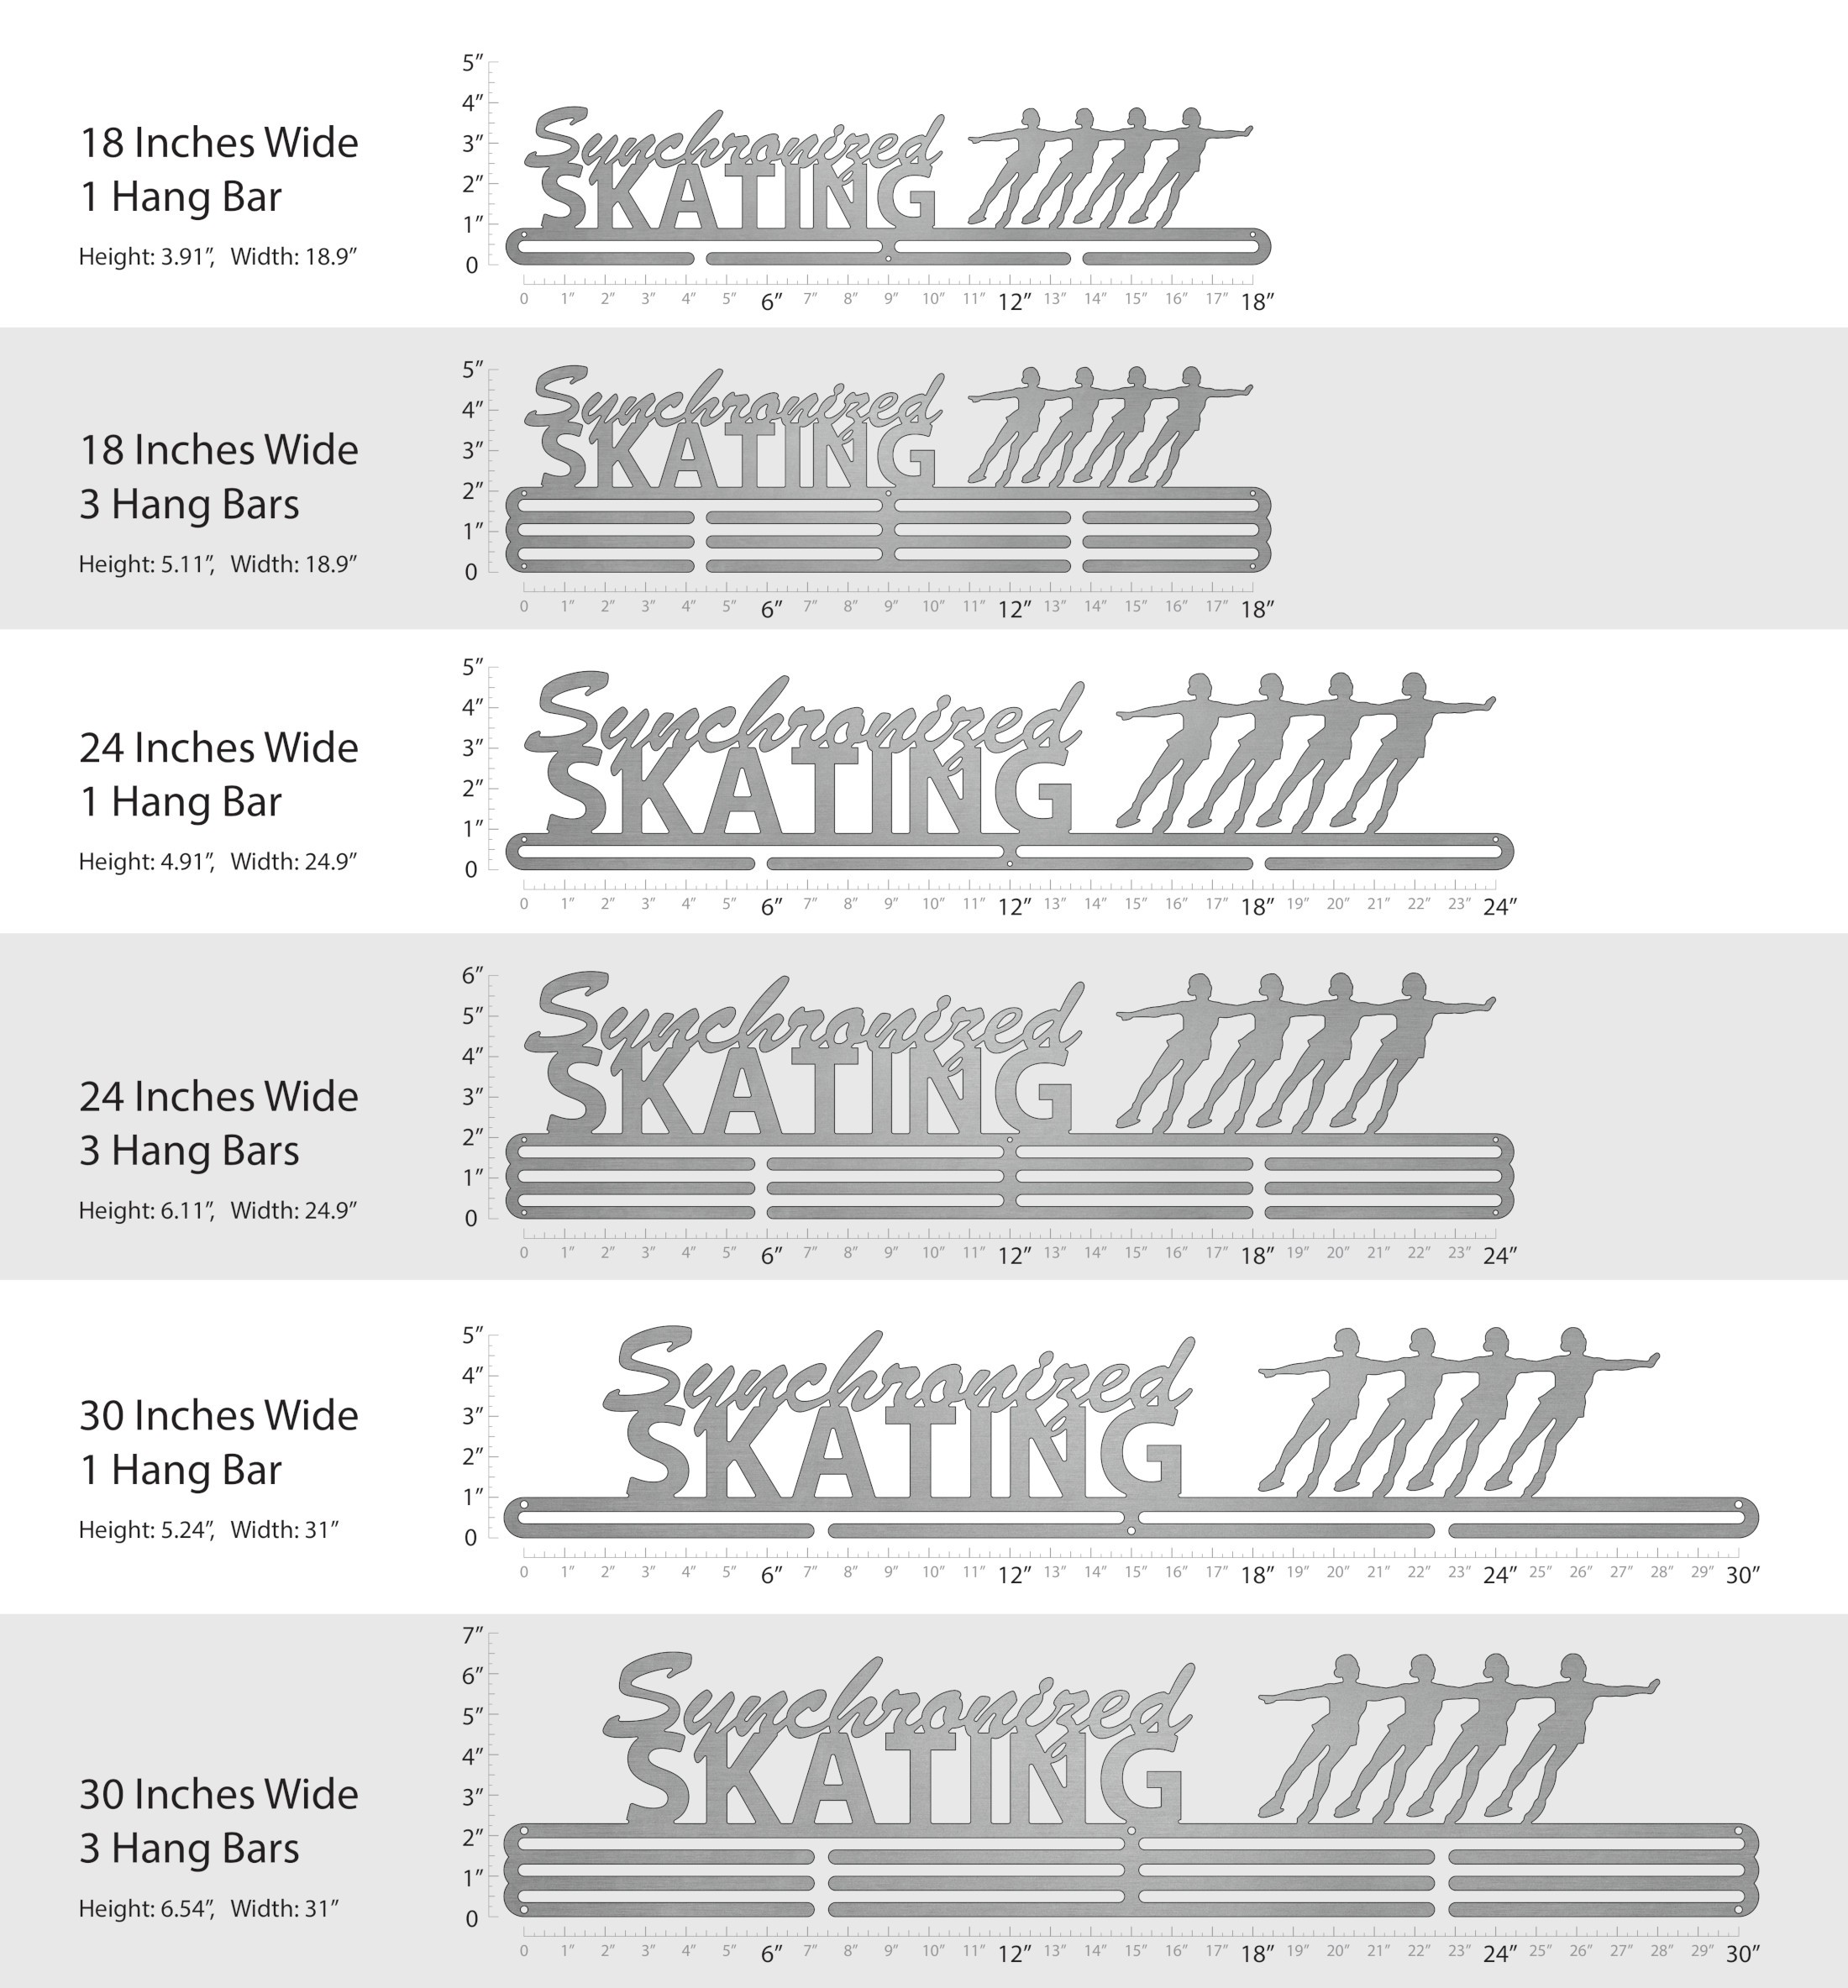 Synchronized Figure Skating